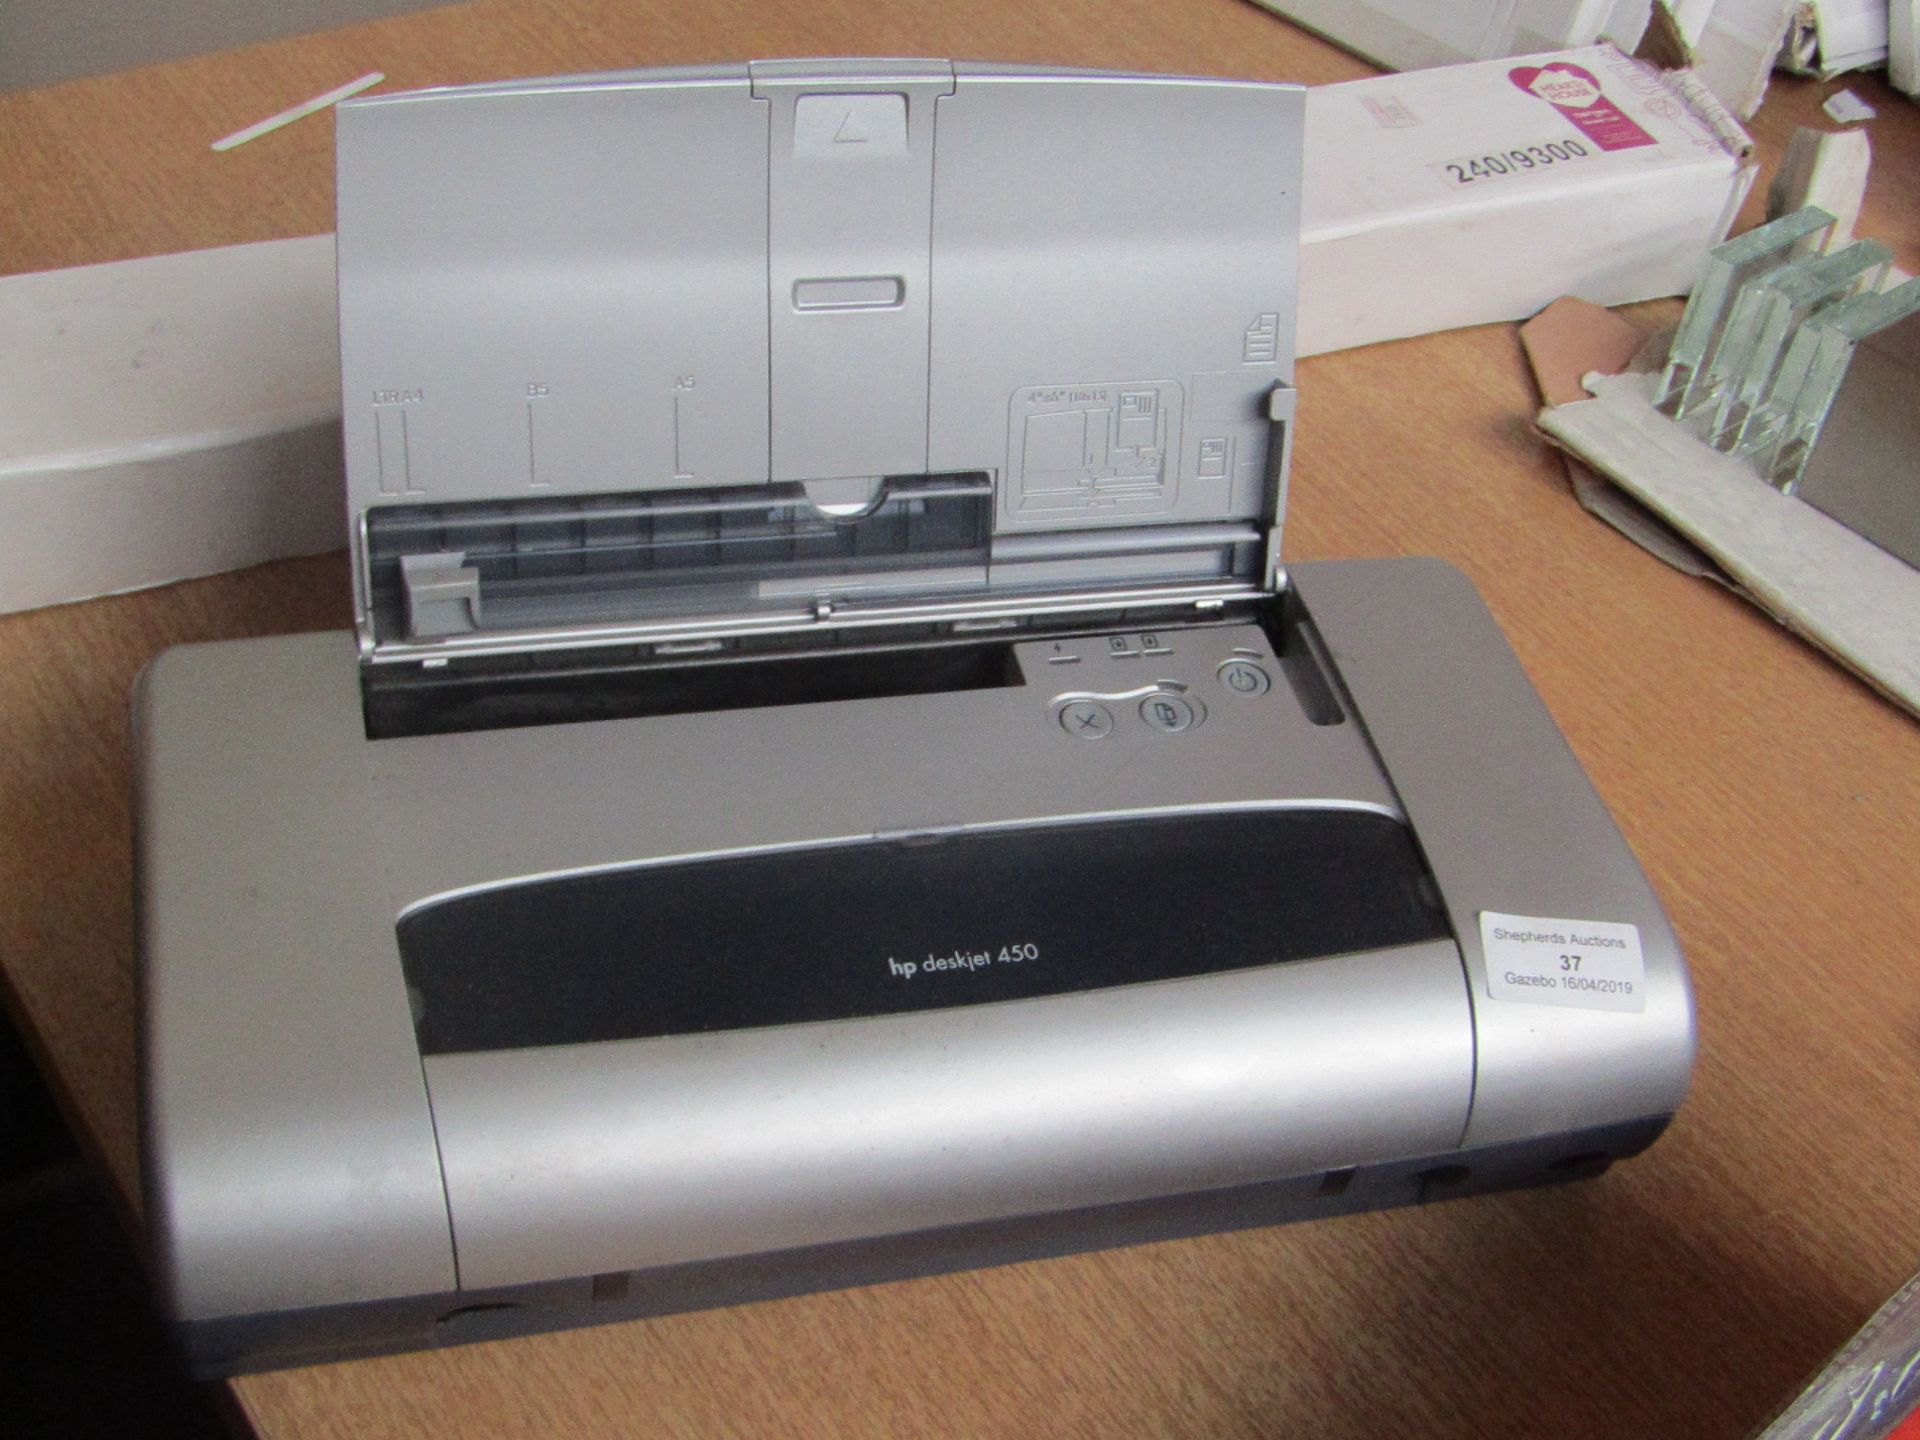 HP Deckjet 450 Printer, untested